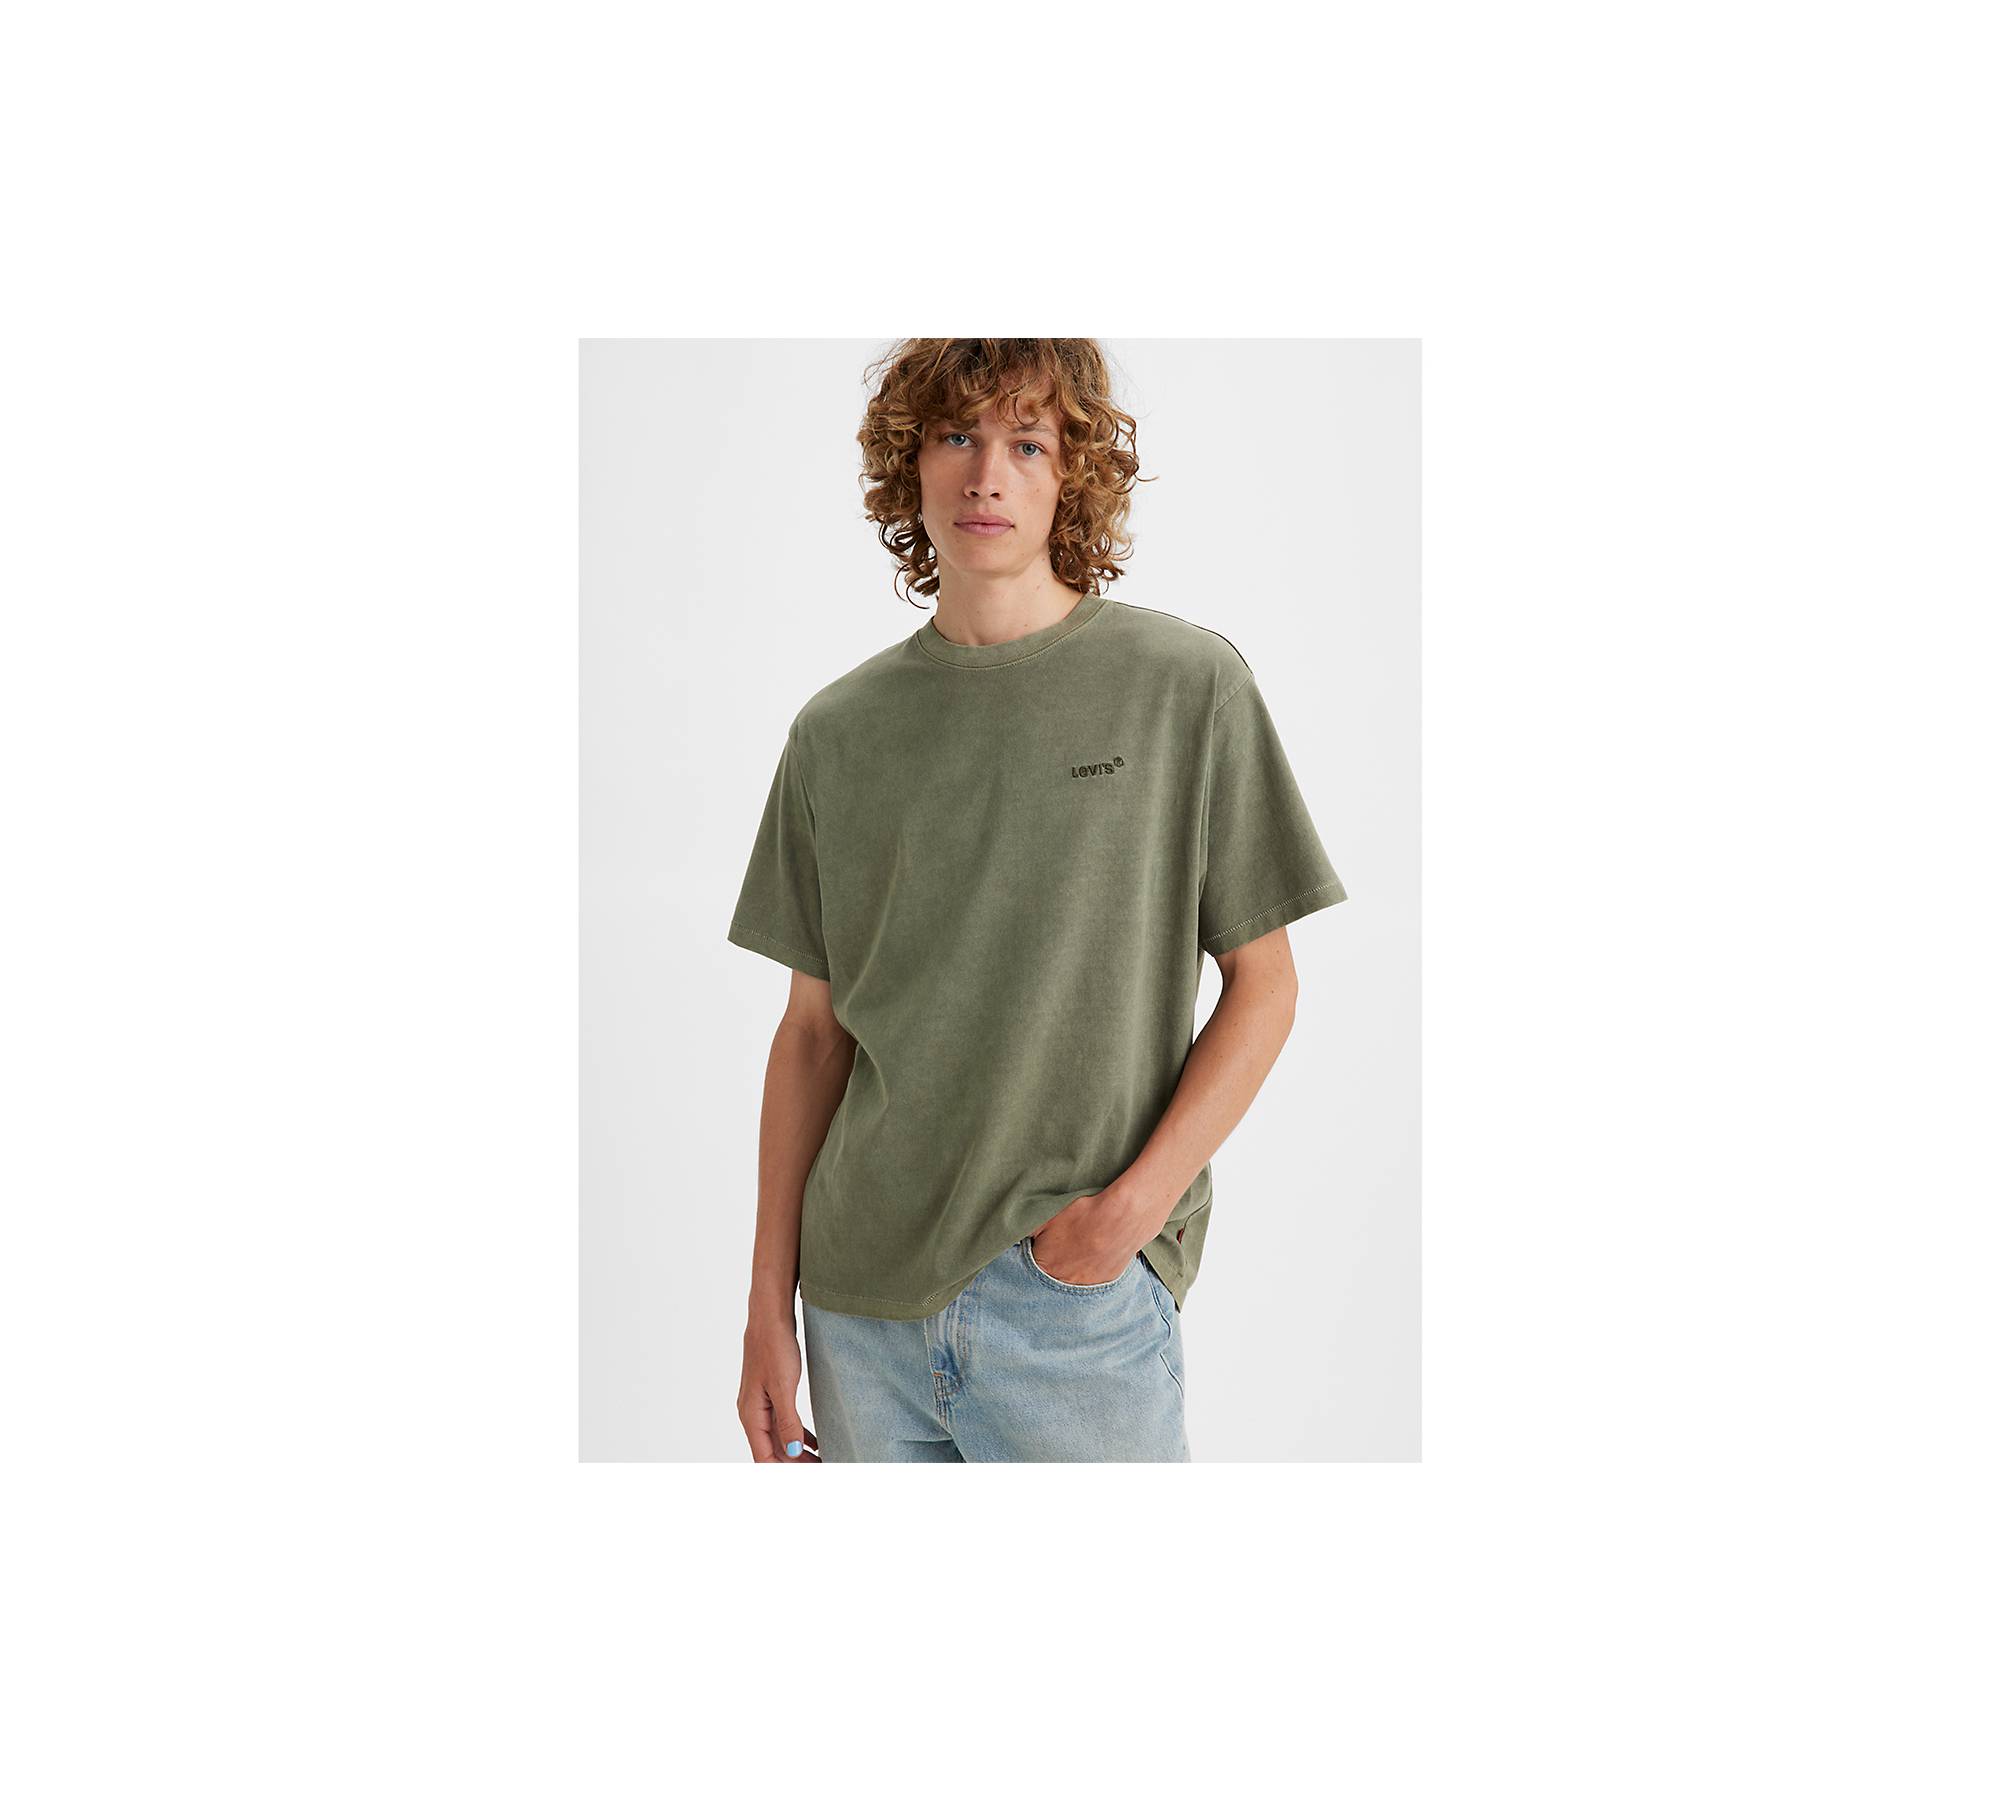 Levi's Red Tab Vintage T-Shirt - Men's - Thyme Garment Dye S